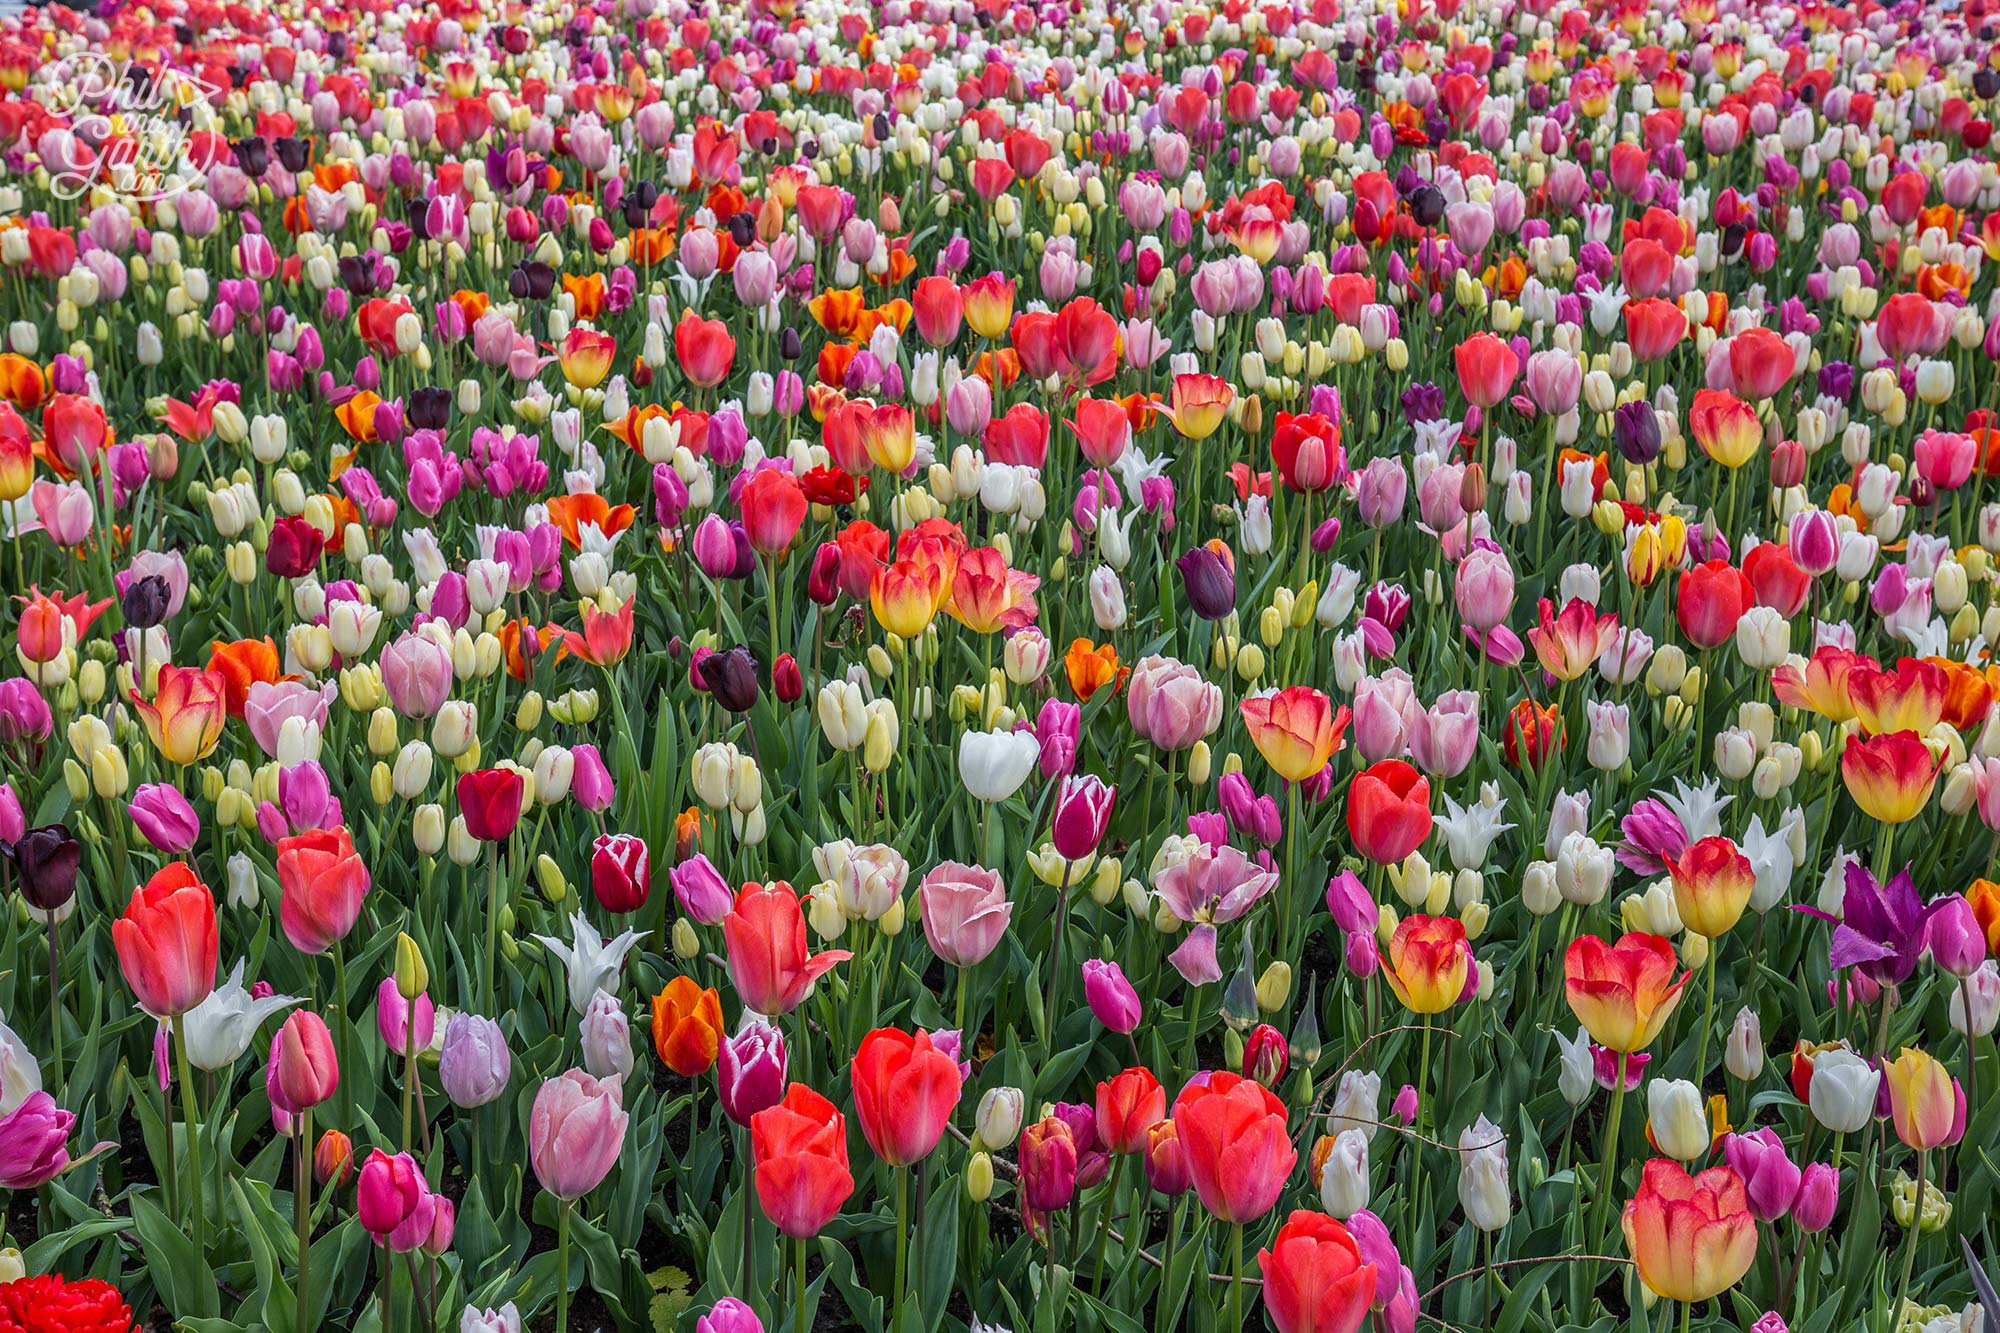 A breathtaking tulip display as you enter the Keukenhof gardens